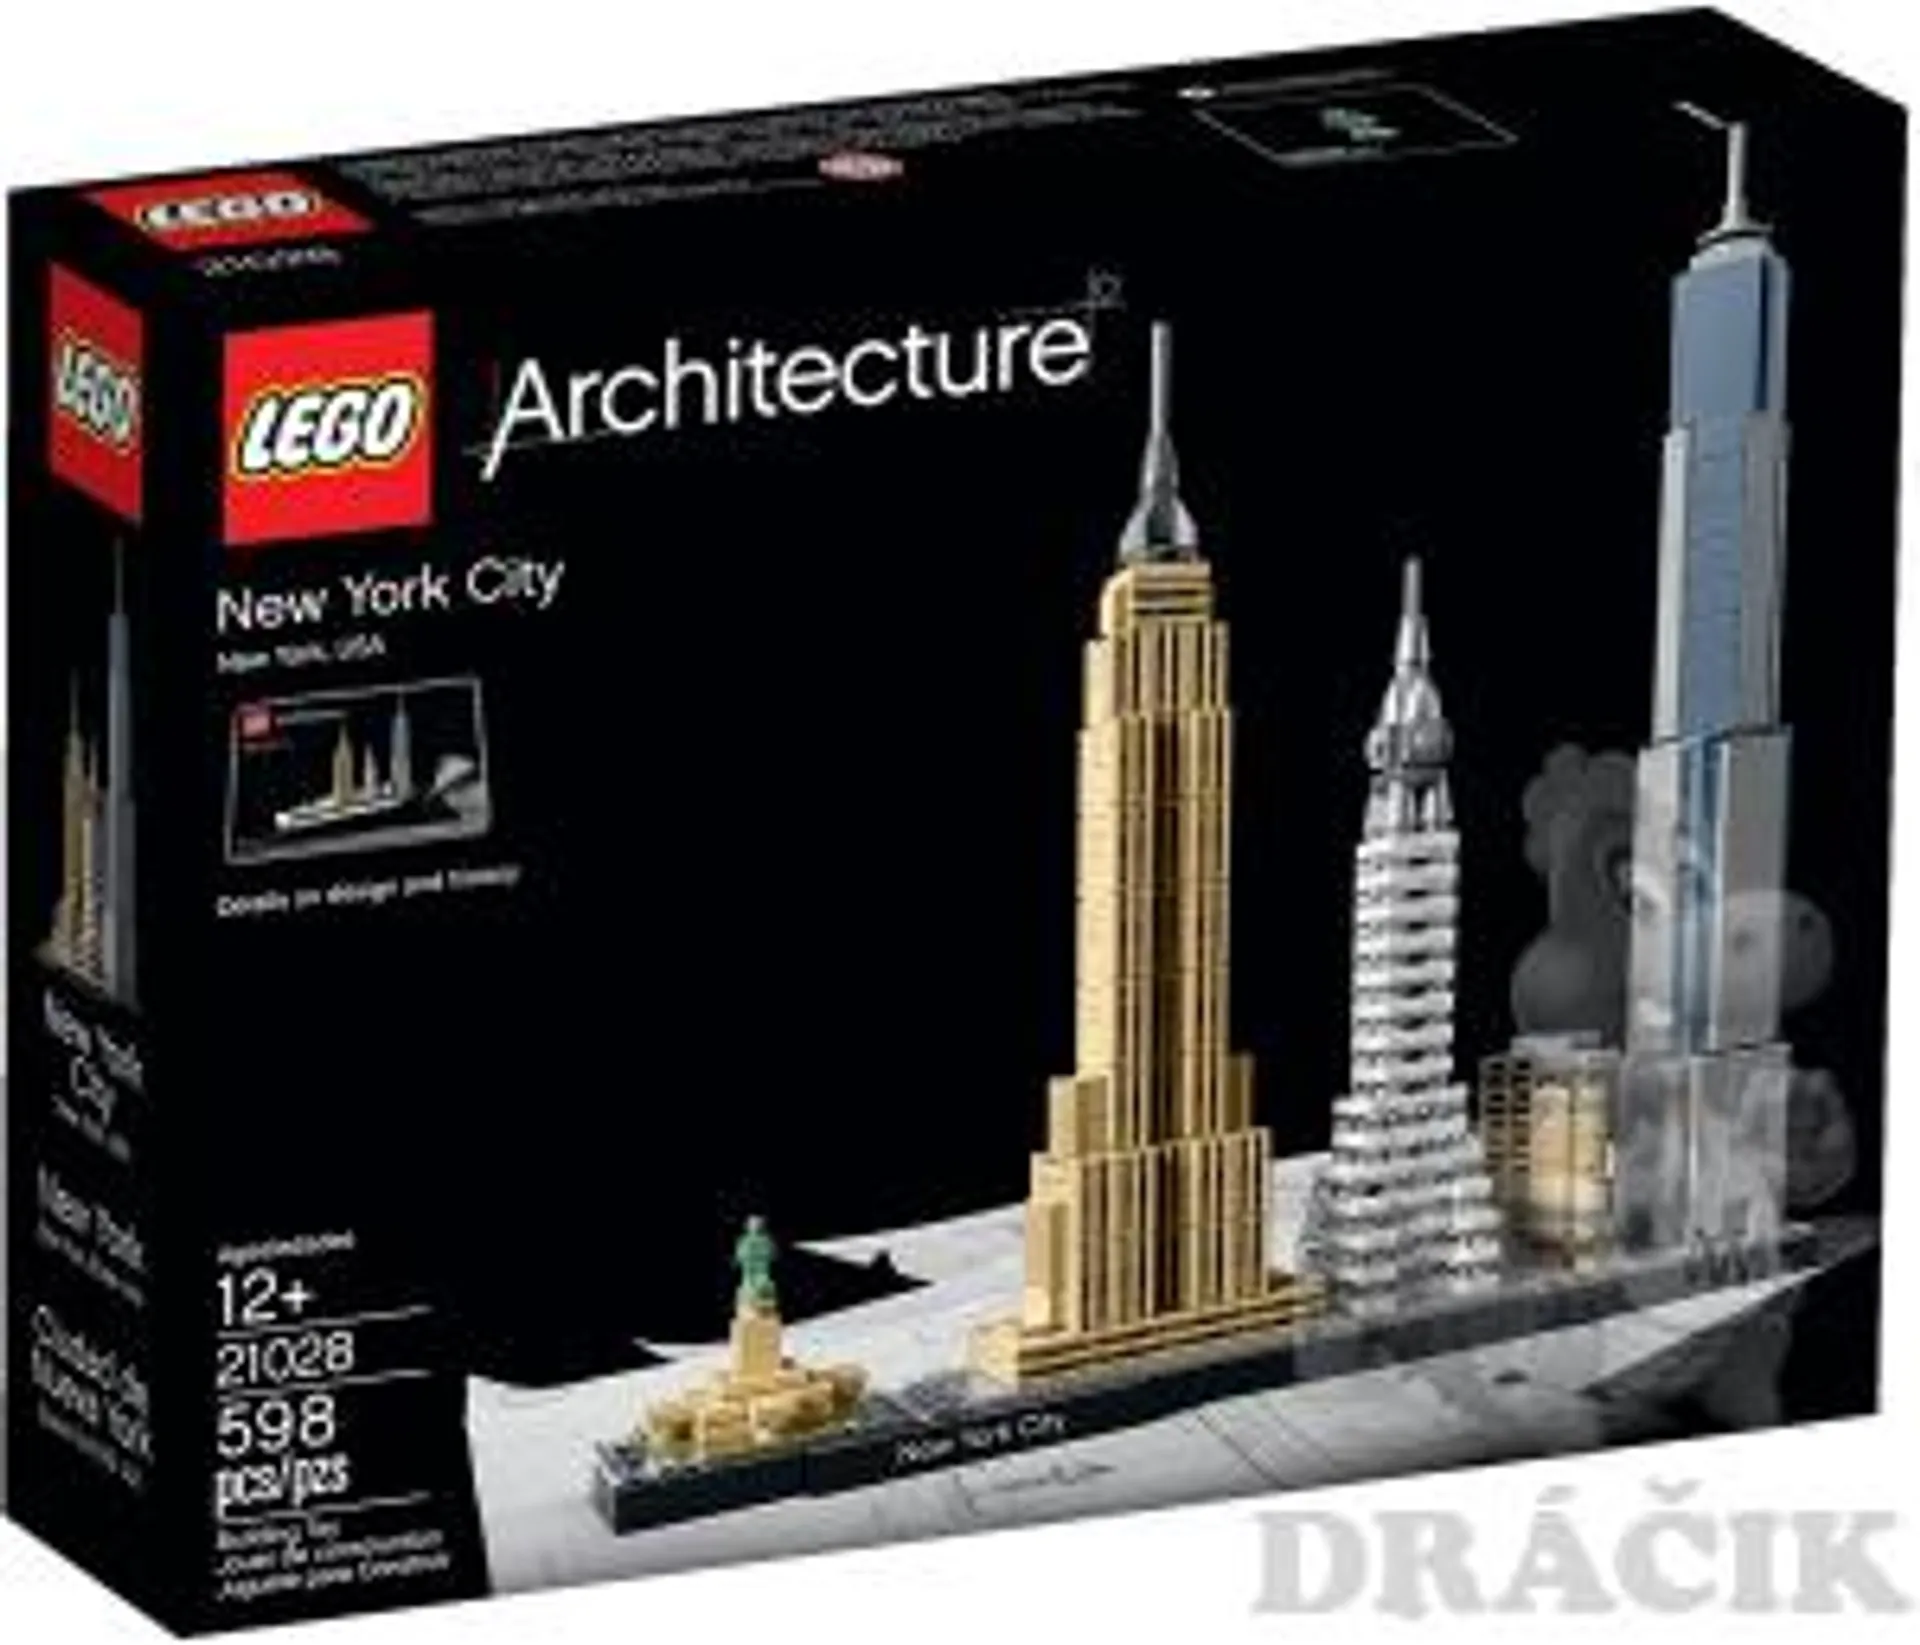 21028 LEGO ARCHITECTURE - New York City